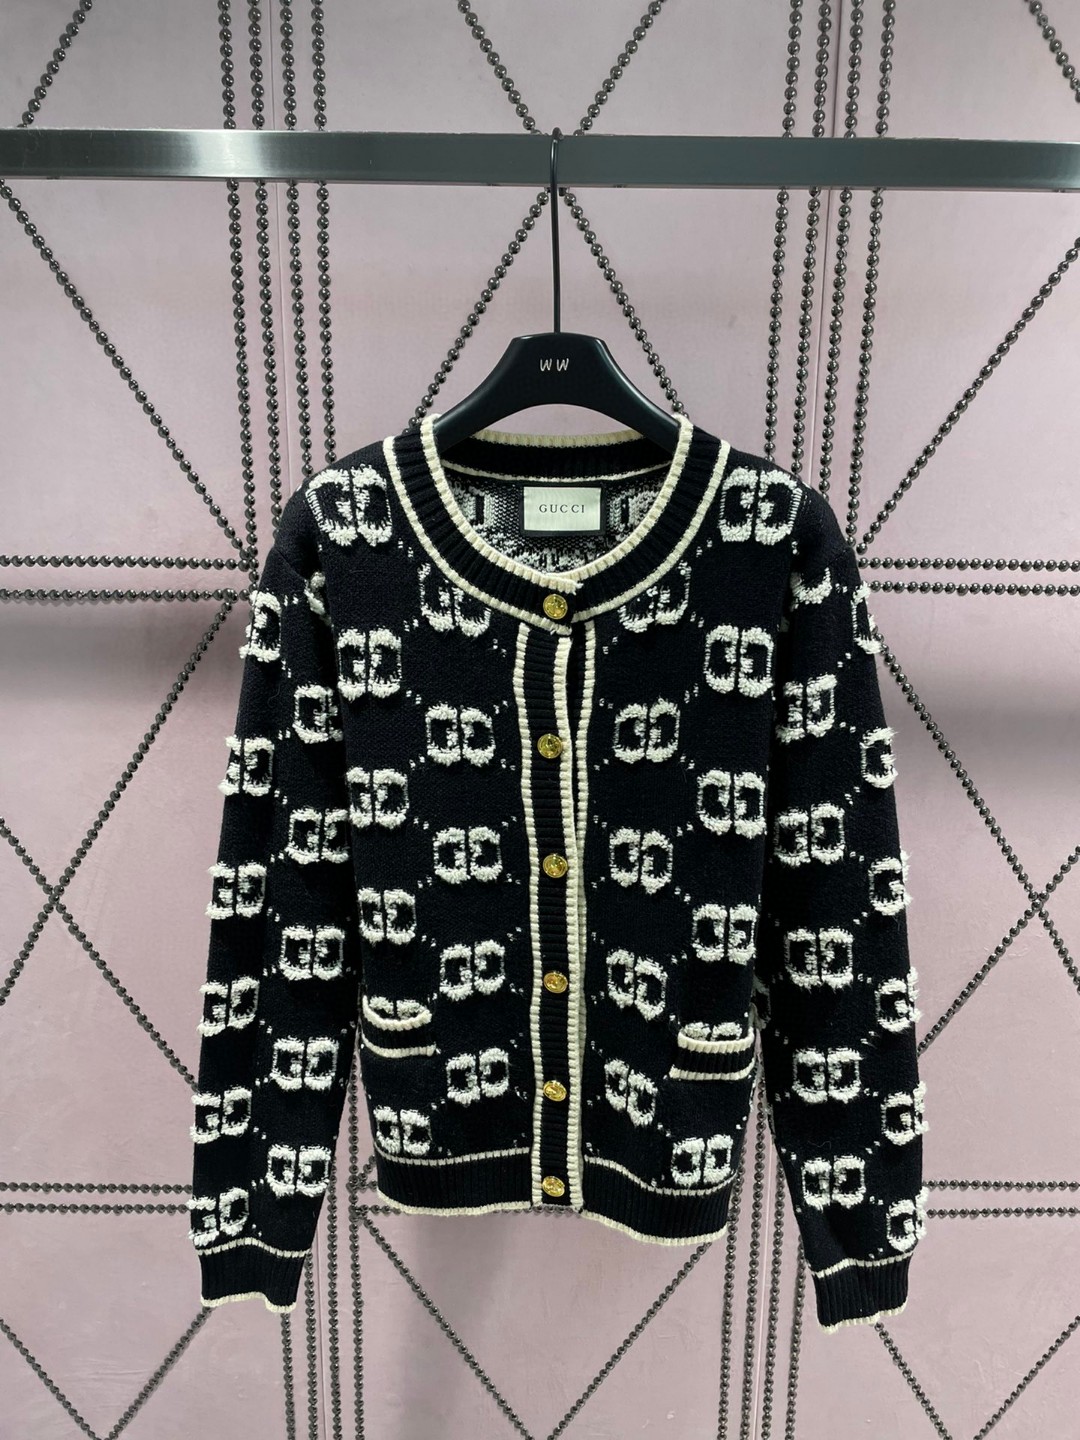 Gucci Clothing Cardigans Coats & Jackets Knit Sweater Sweatshirts Knitting Fall/Winter Collection Fashion